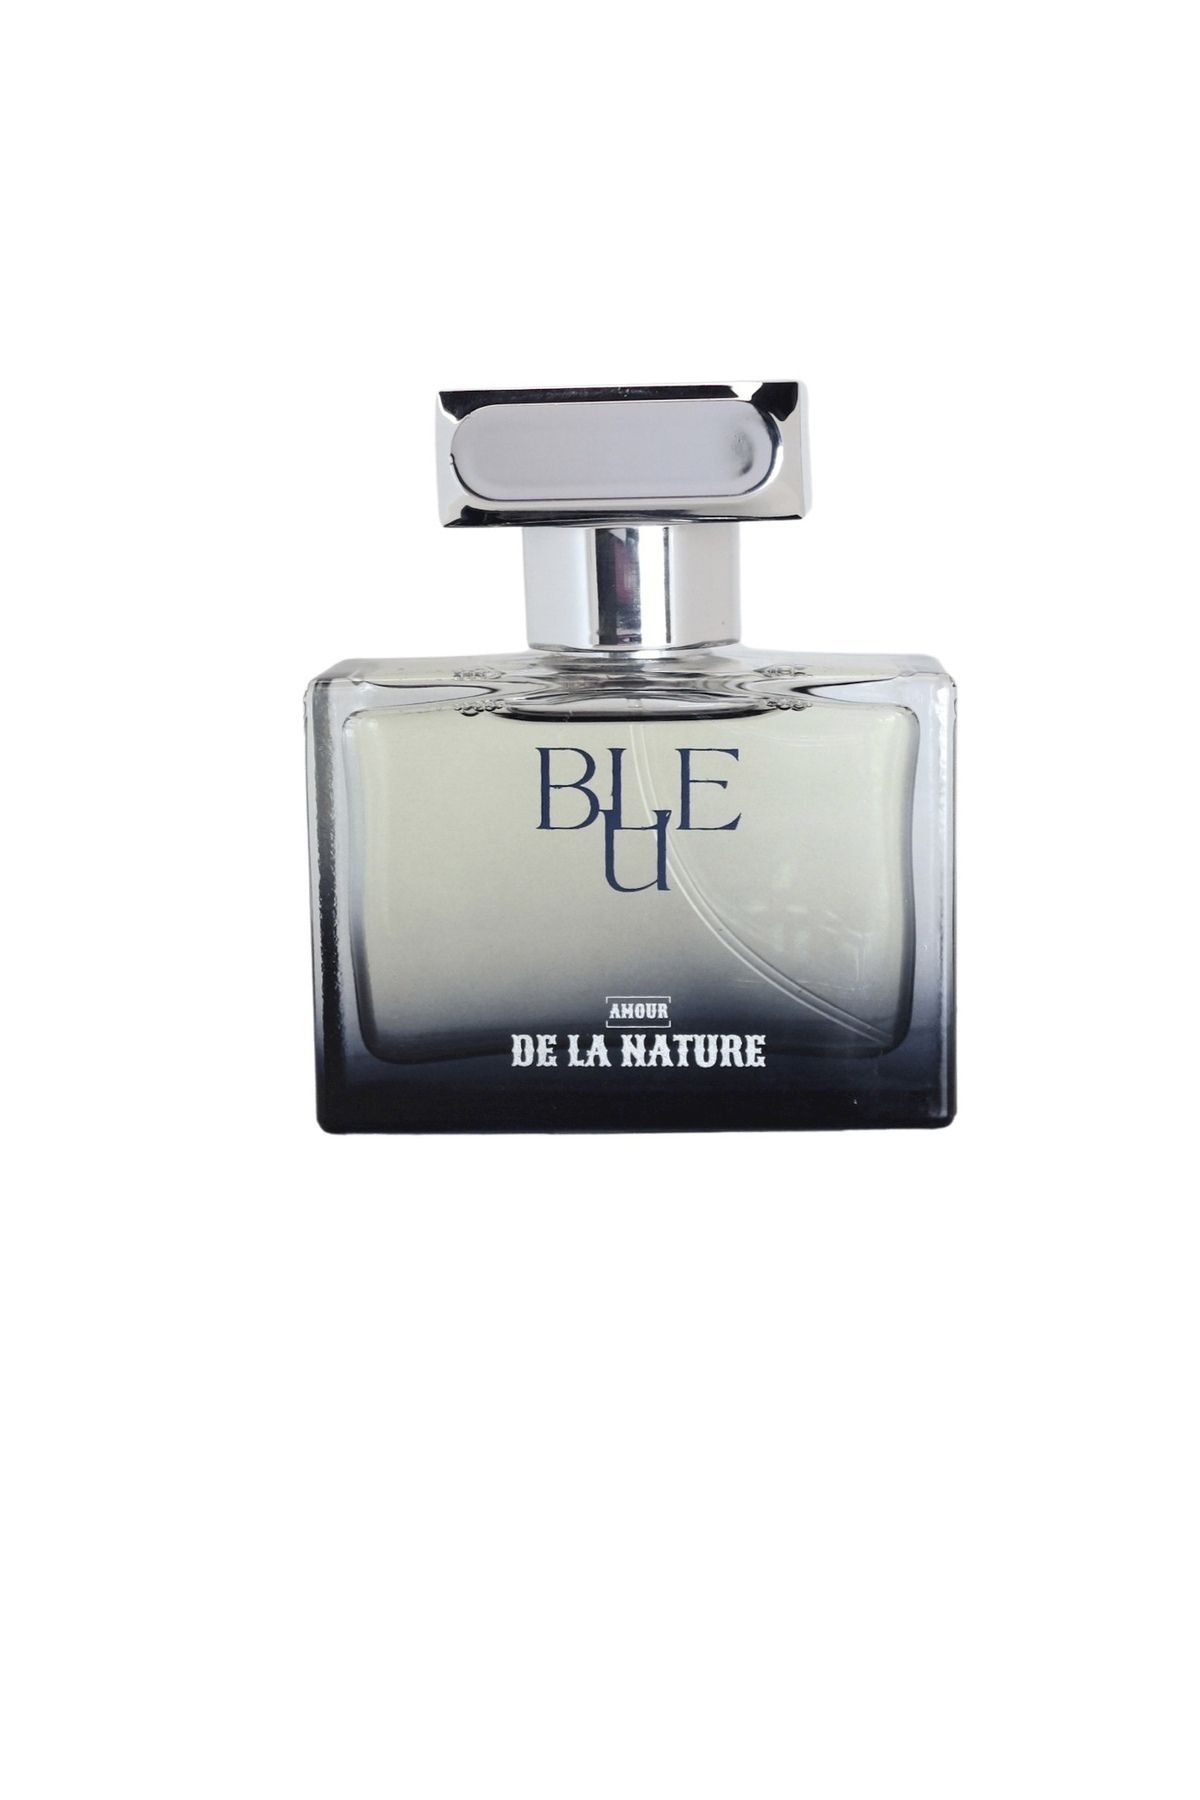 AMOUR DE LA NATURE Bleu Erkek Parfüm 50ml Edp